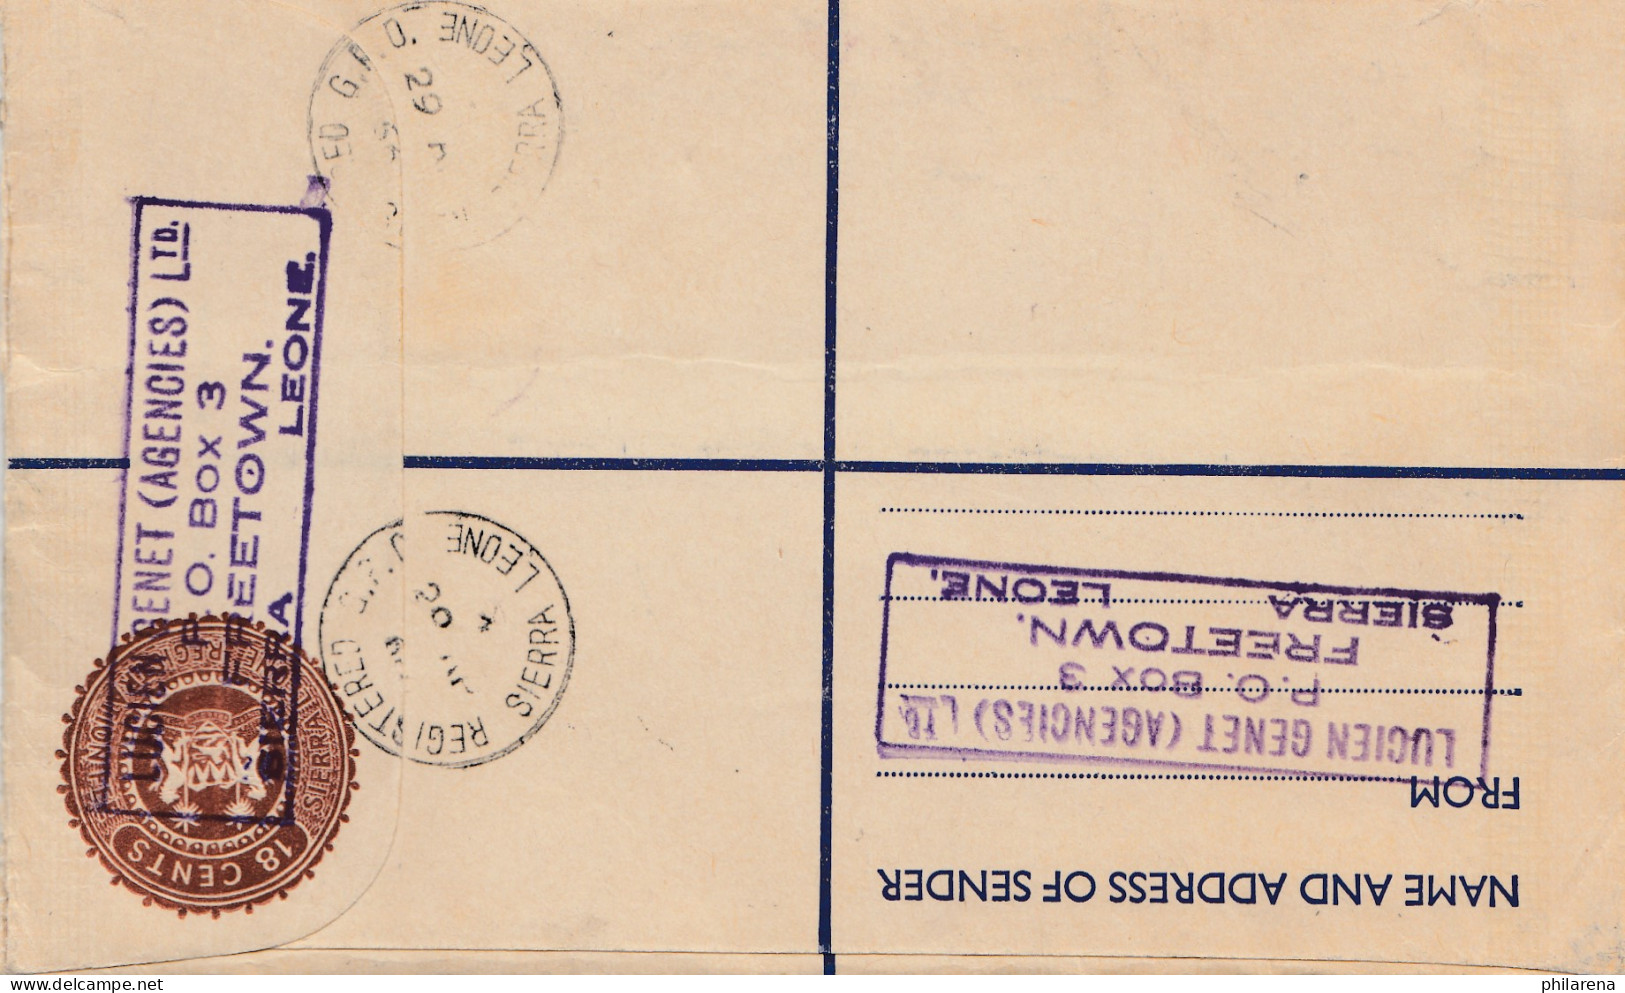 Sierra Leone: Freetown, Air Mail Registered To Nürnberg - Sierra Leone (1961-...)